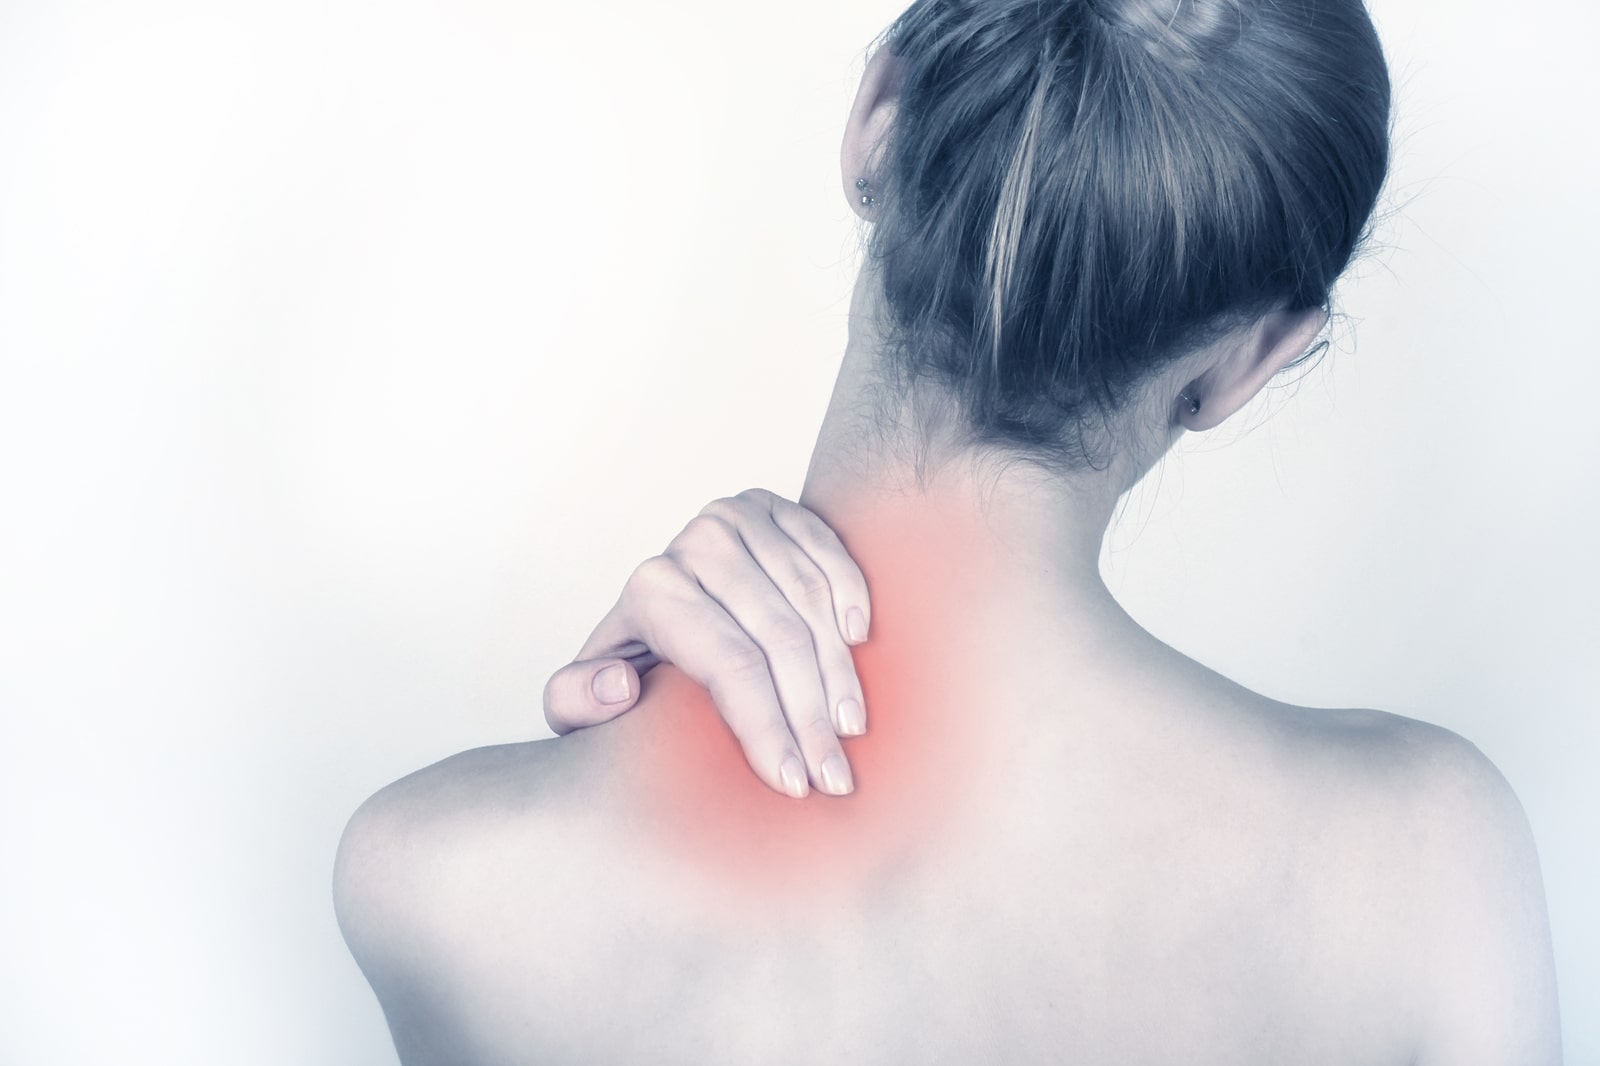 sudden acute neck pain, or chronic neck problems